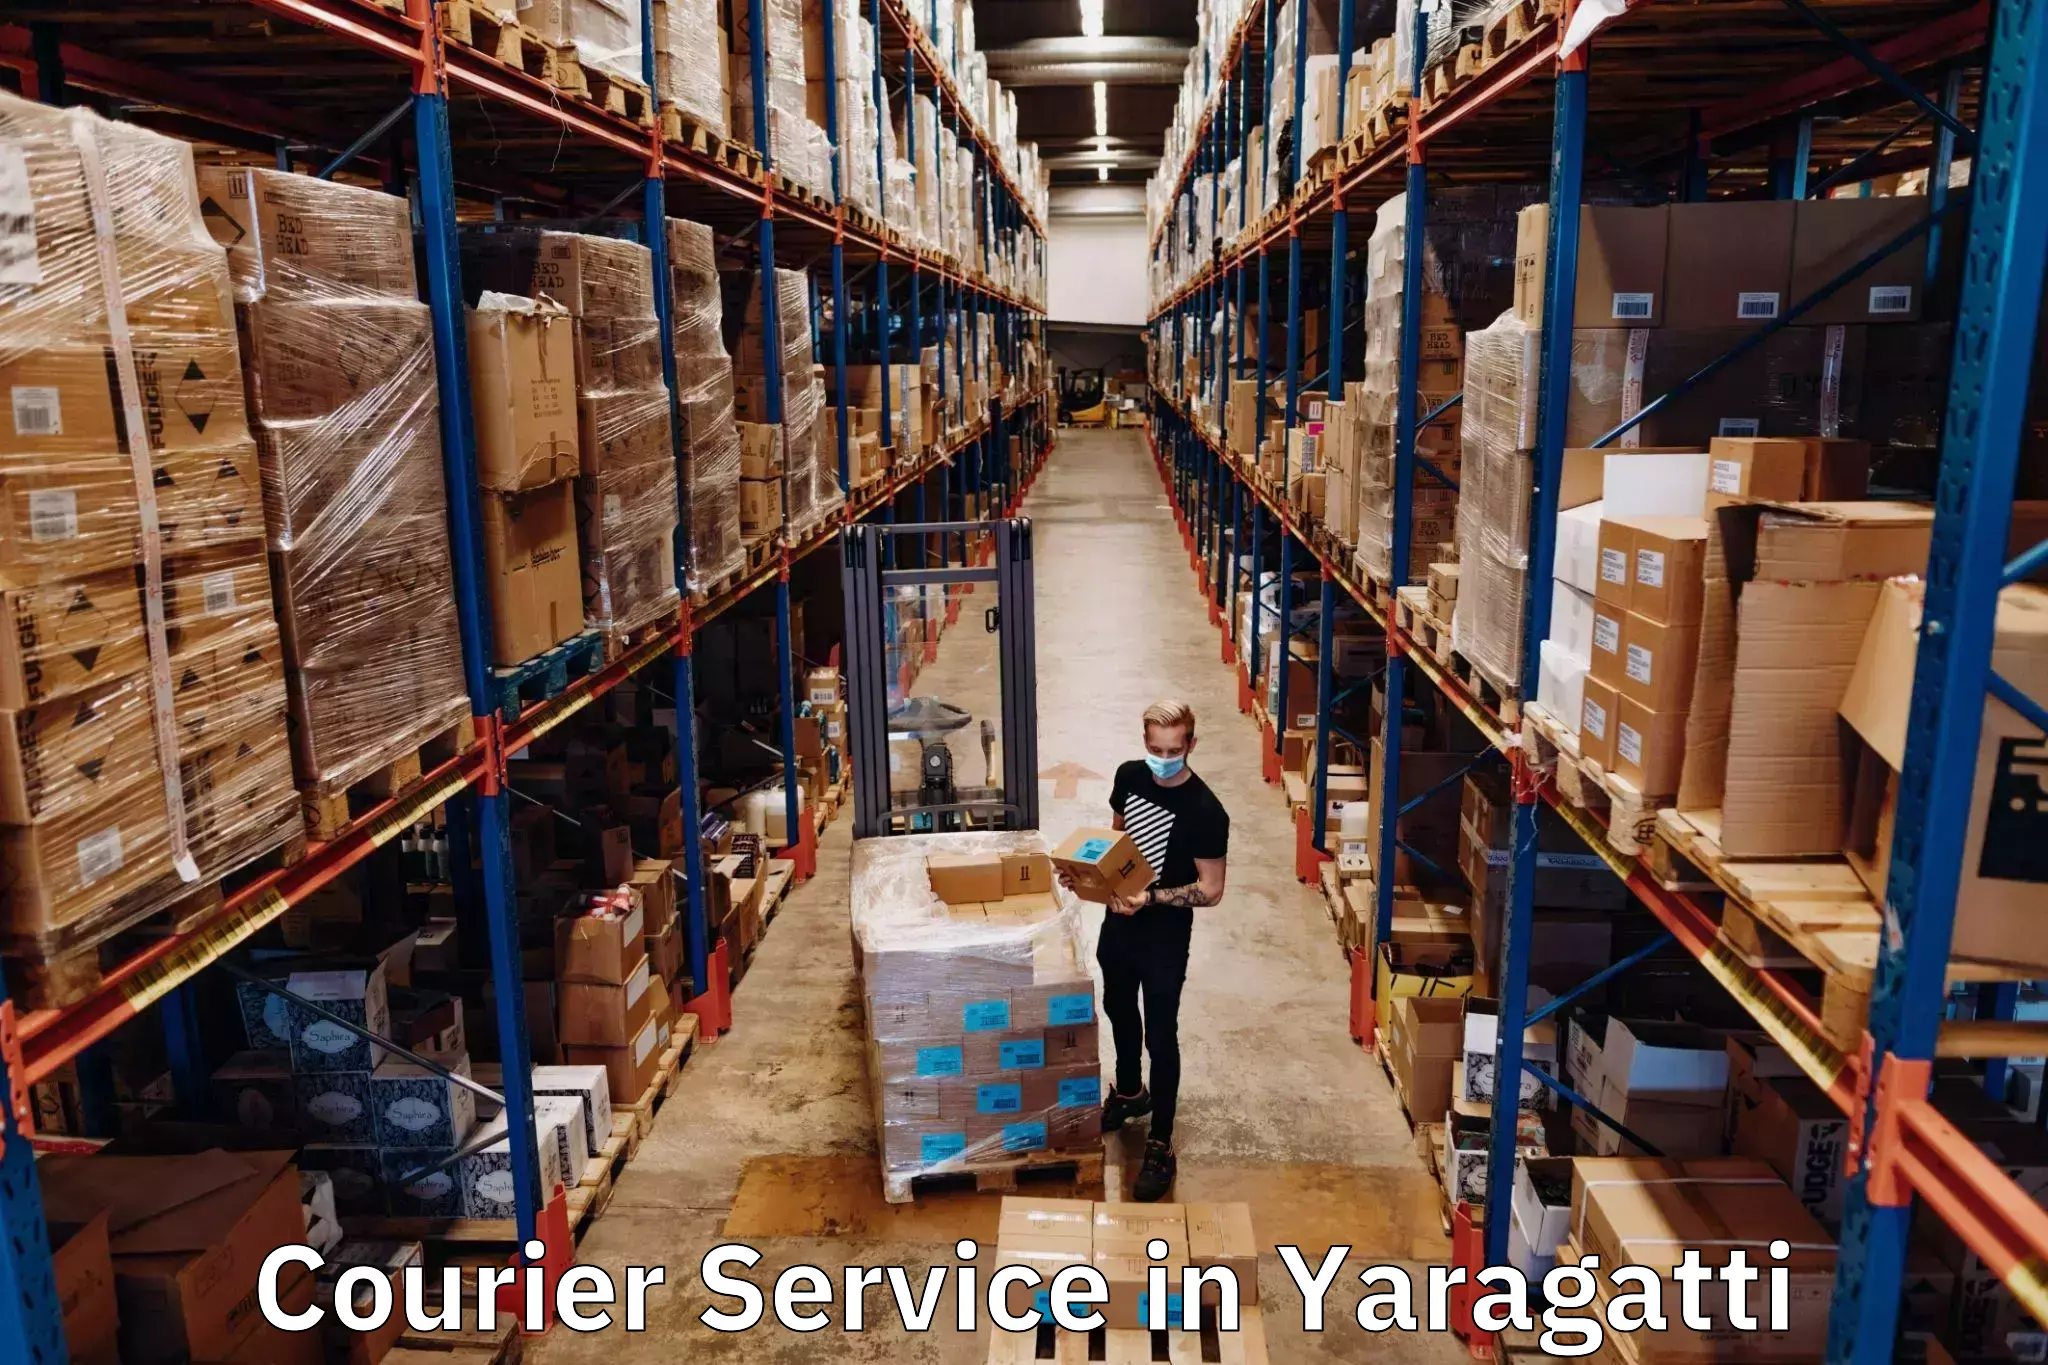 Nationwide shipping capabilities in Yaragatti